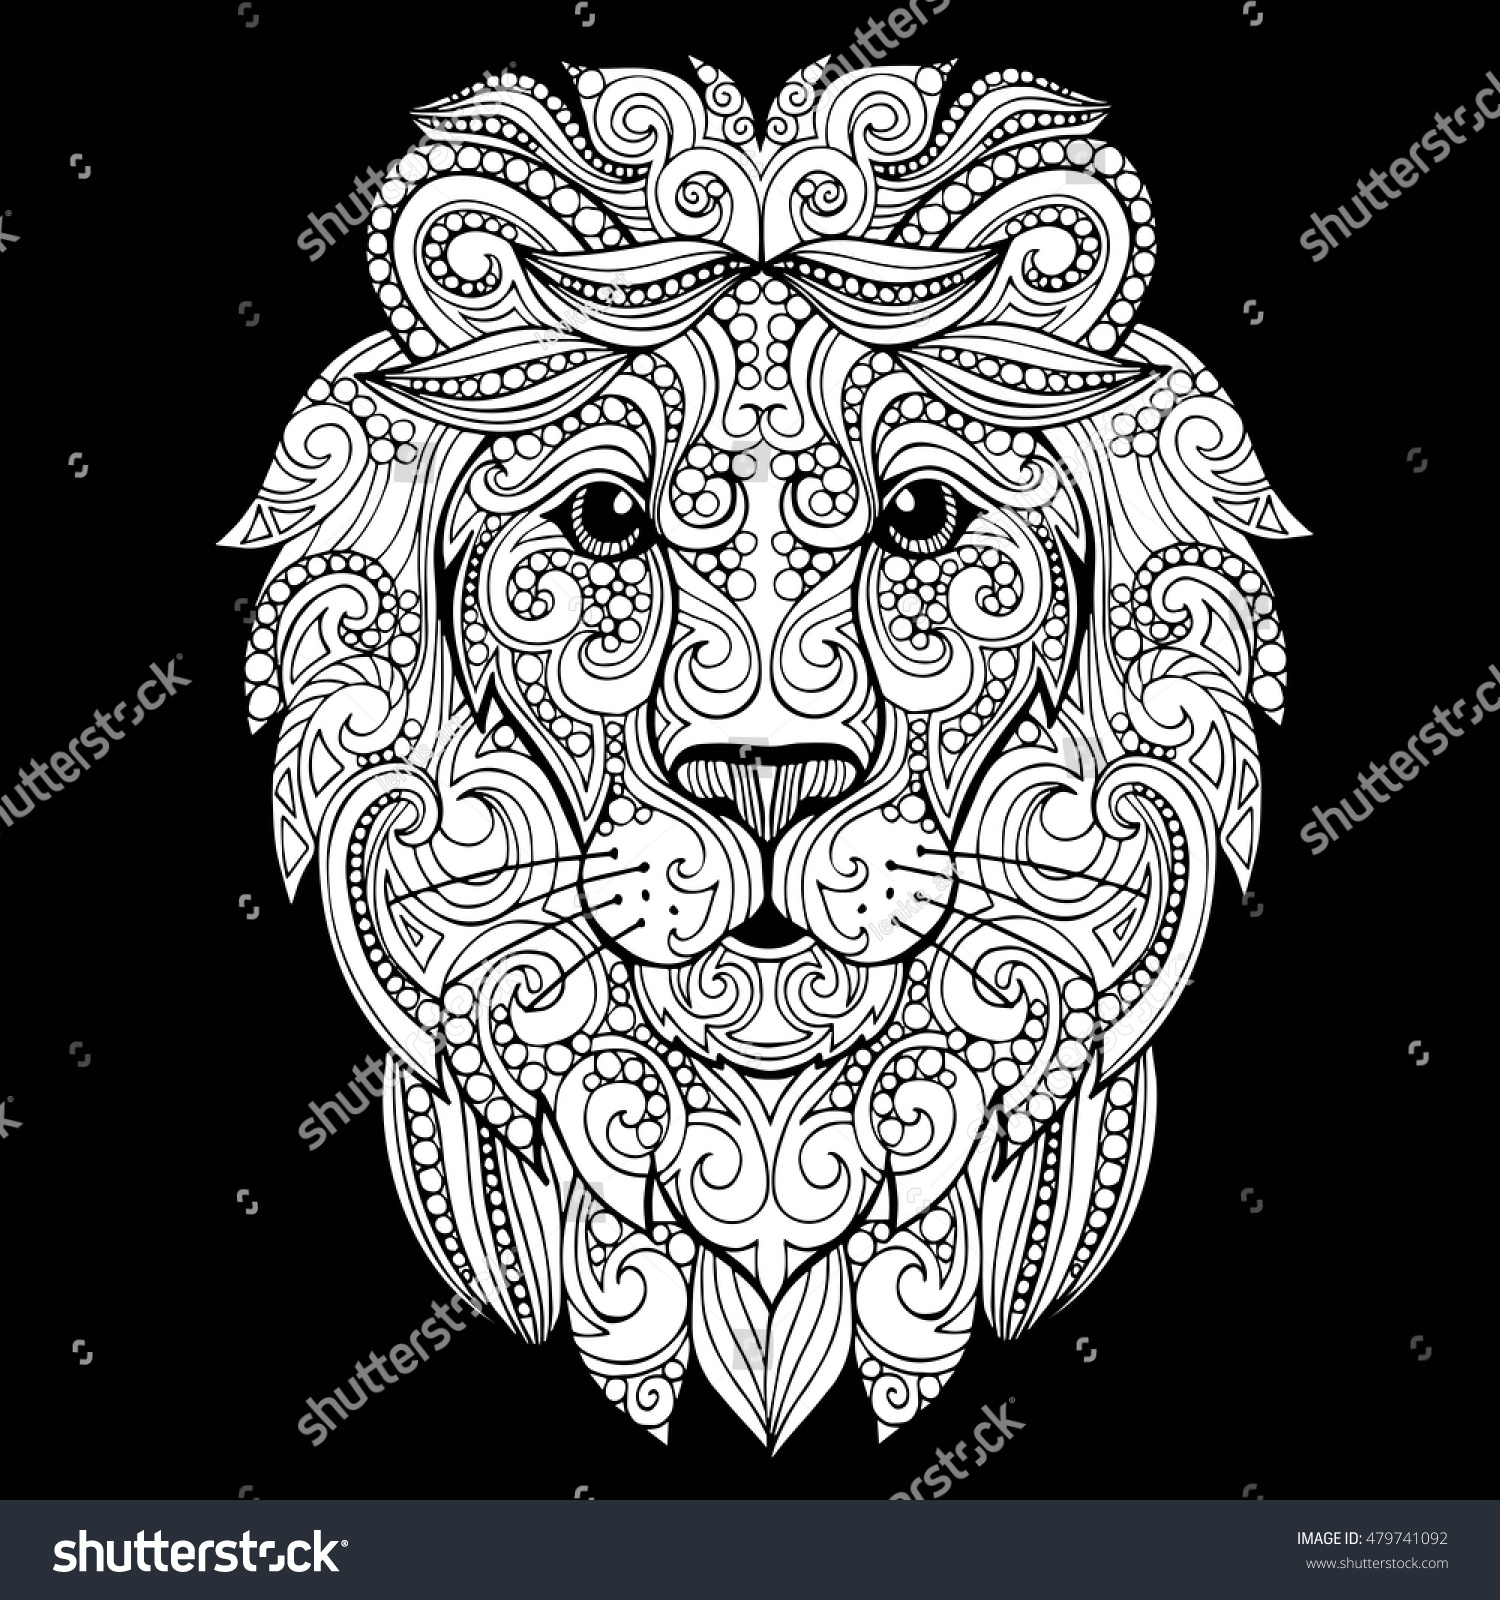 Hand Drawn Doodle Zentangle Lion Illustration のベクター画像素材 ロイヤリティフリー